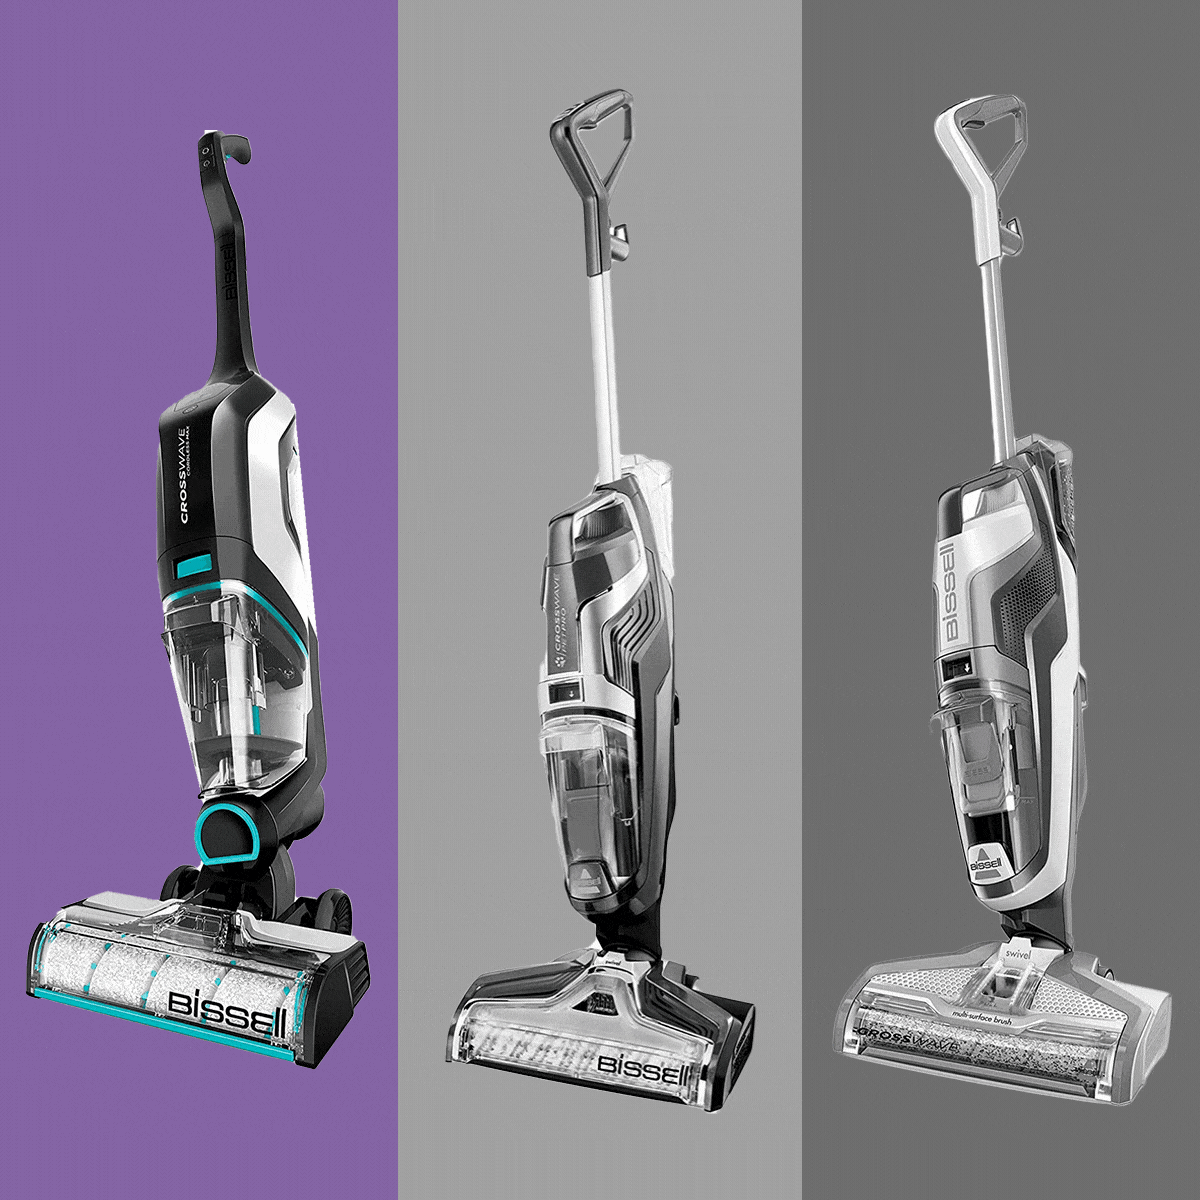 The 7 Best Floor Scrubbers for 2024 - Floor Cleaning Machines